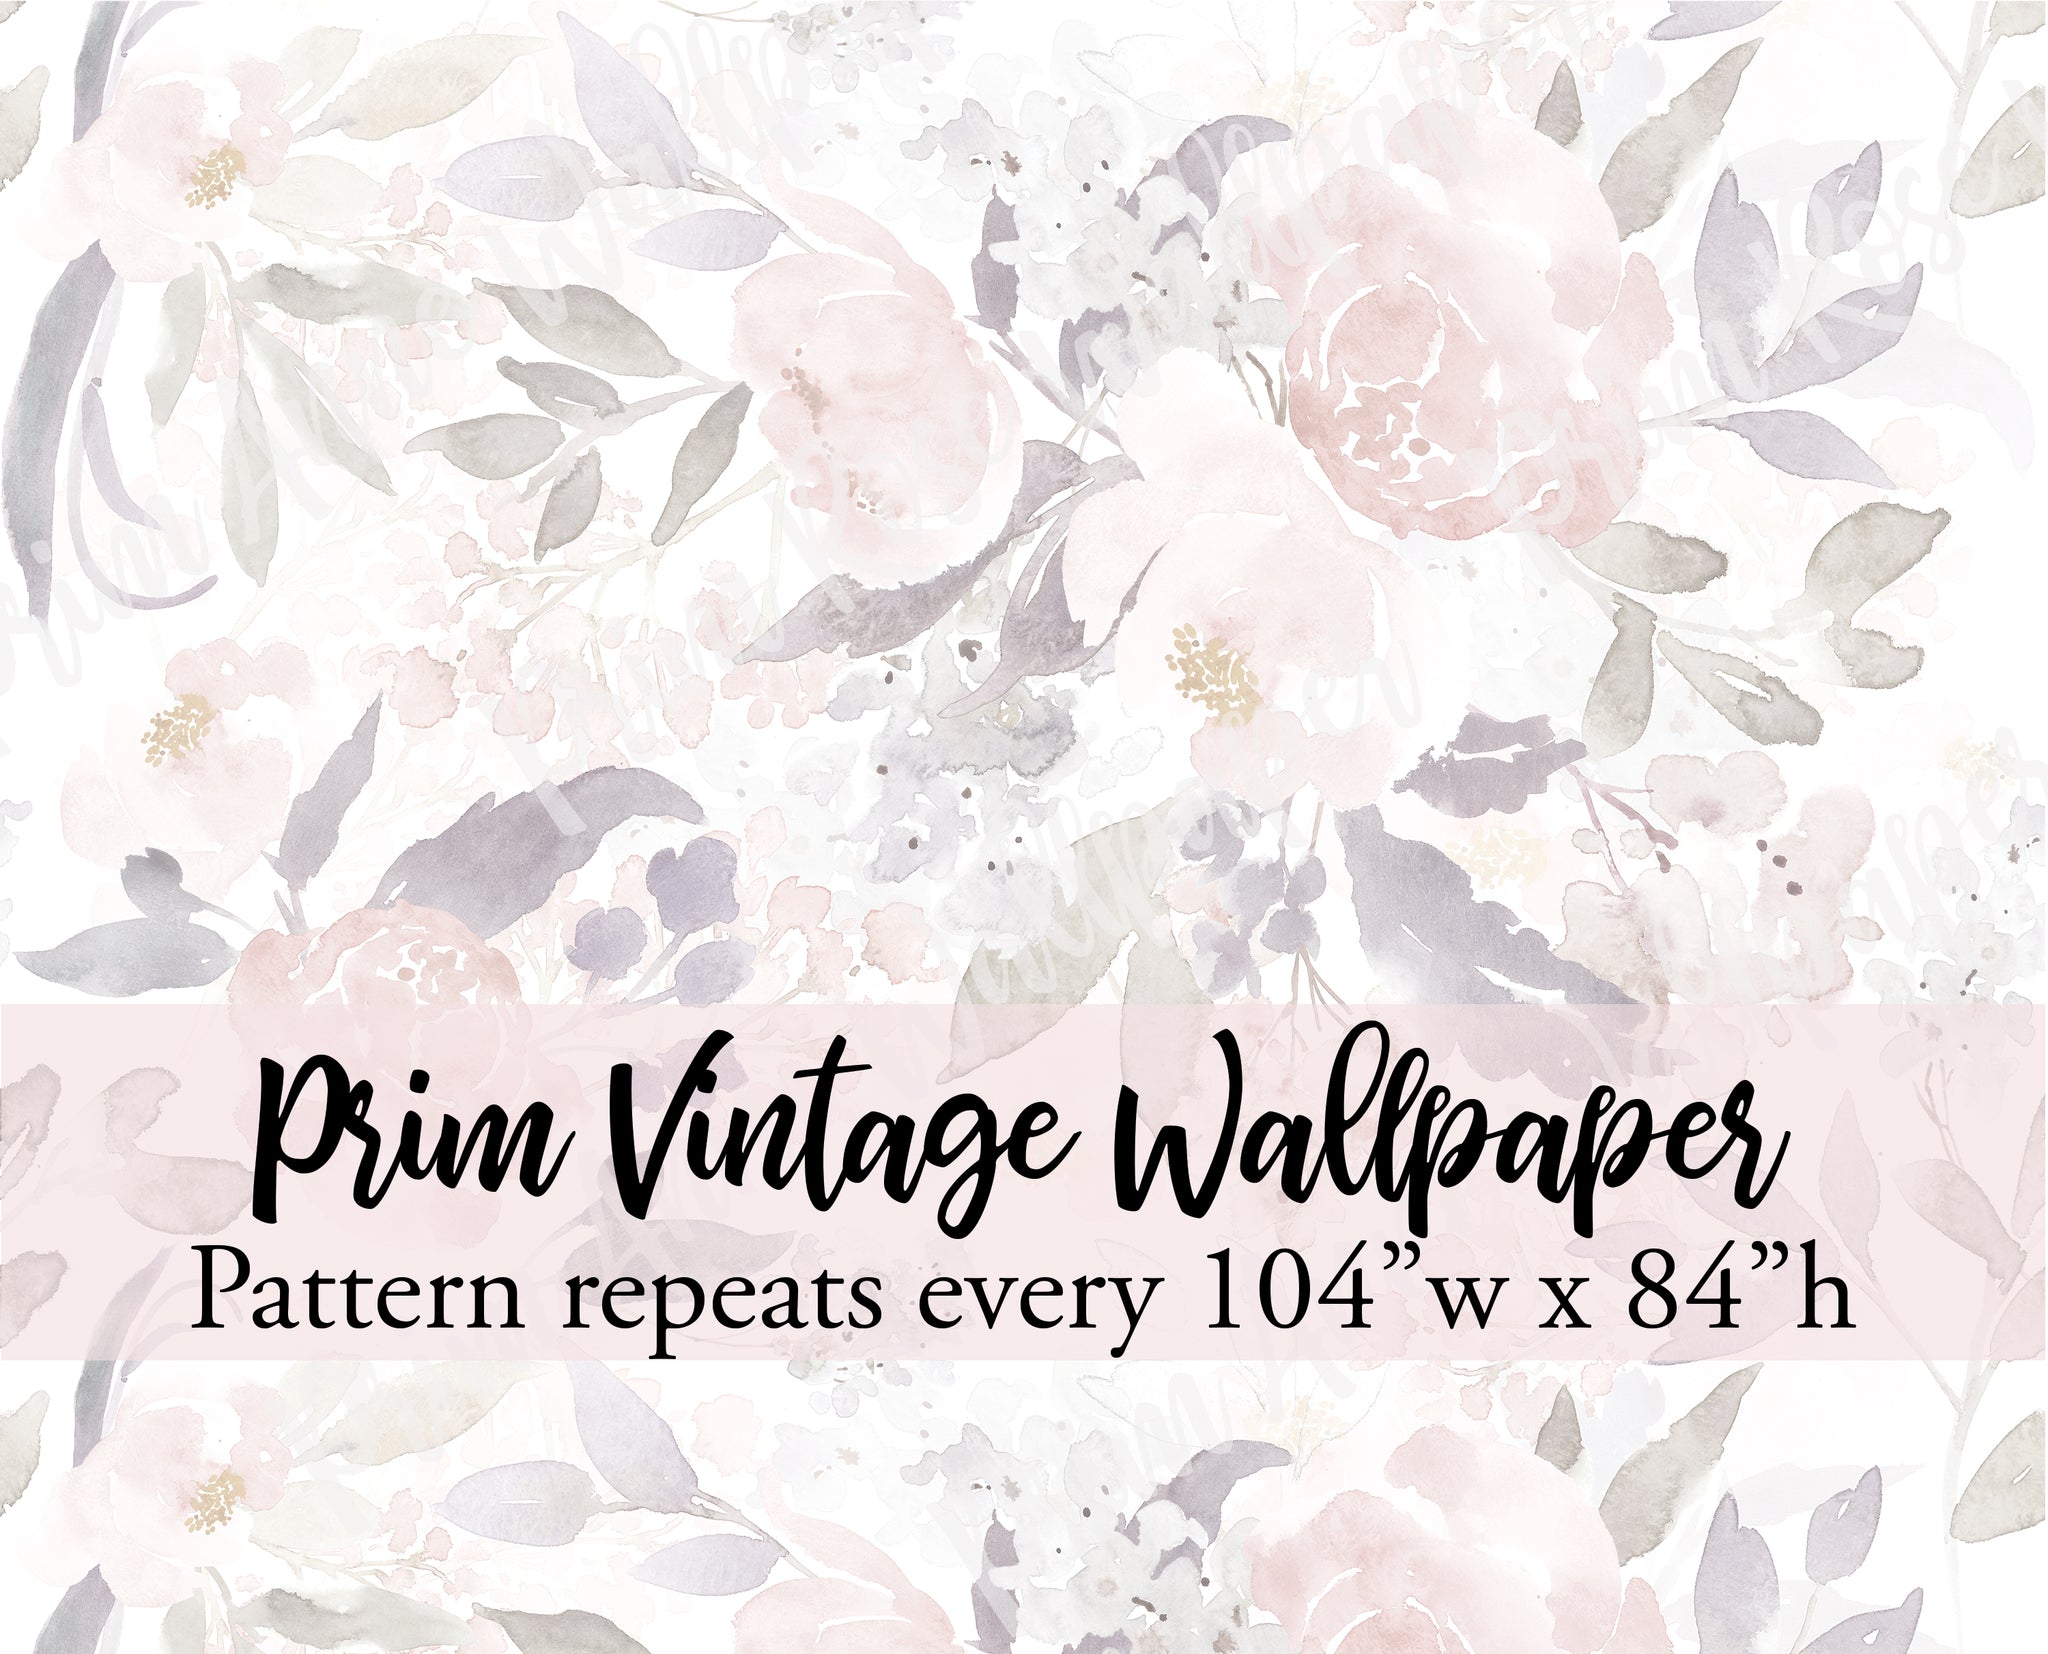 vintage pattern wallpaper pink